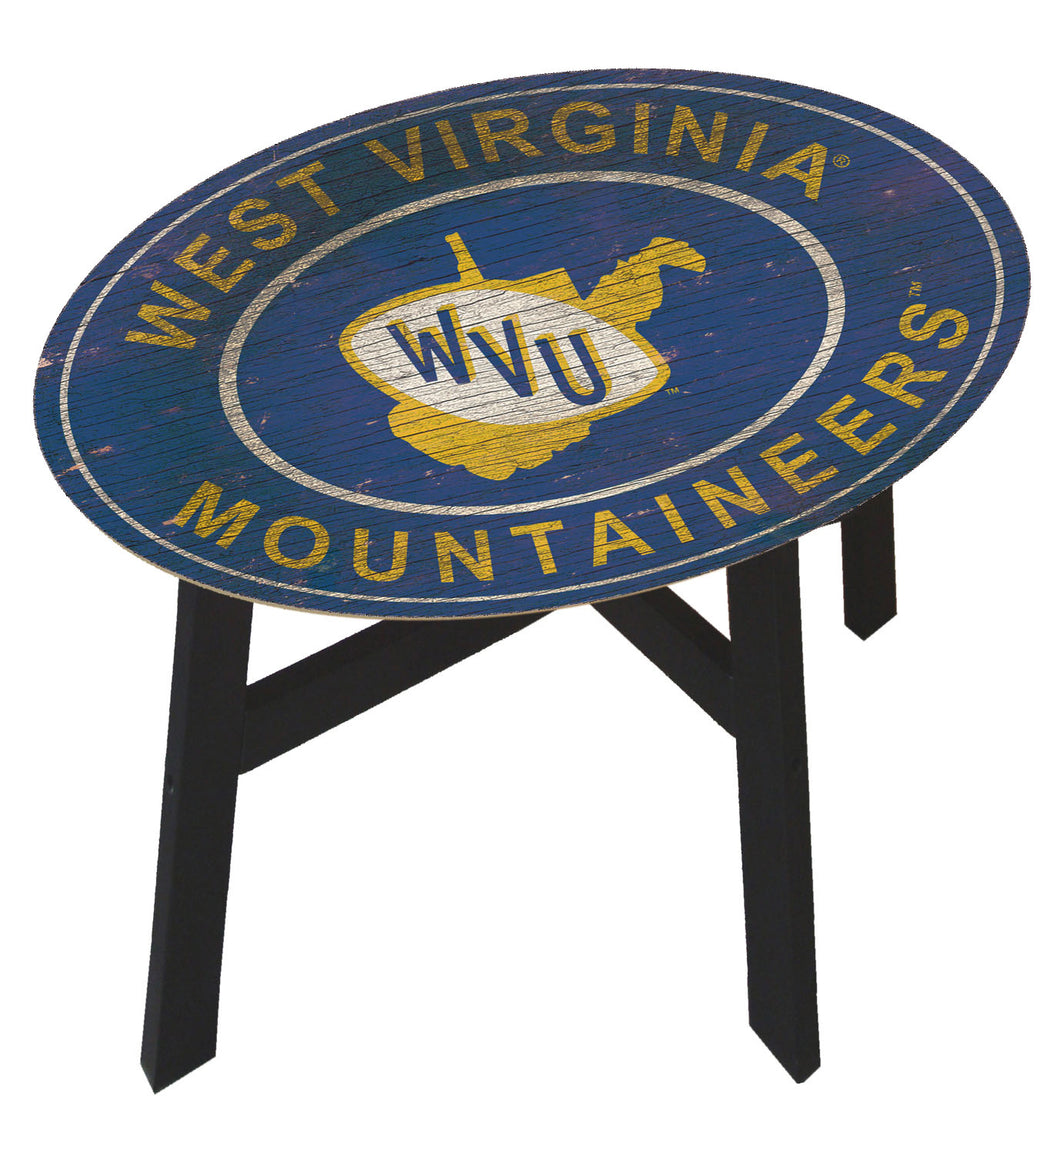 wvu mountaineers table, west virginia mountaineers table